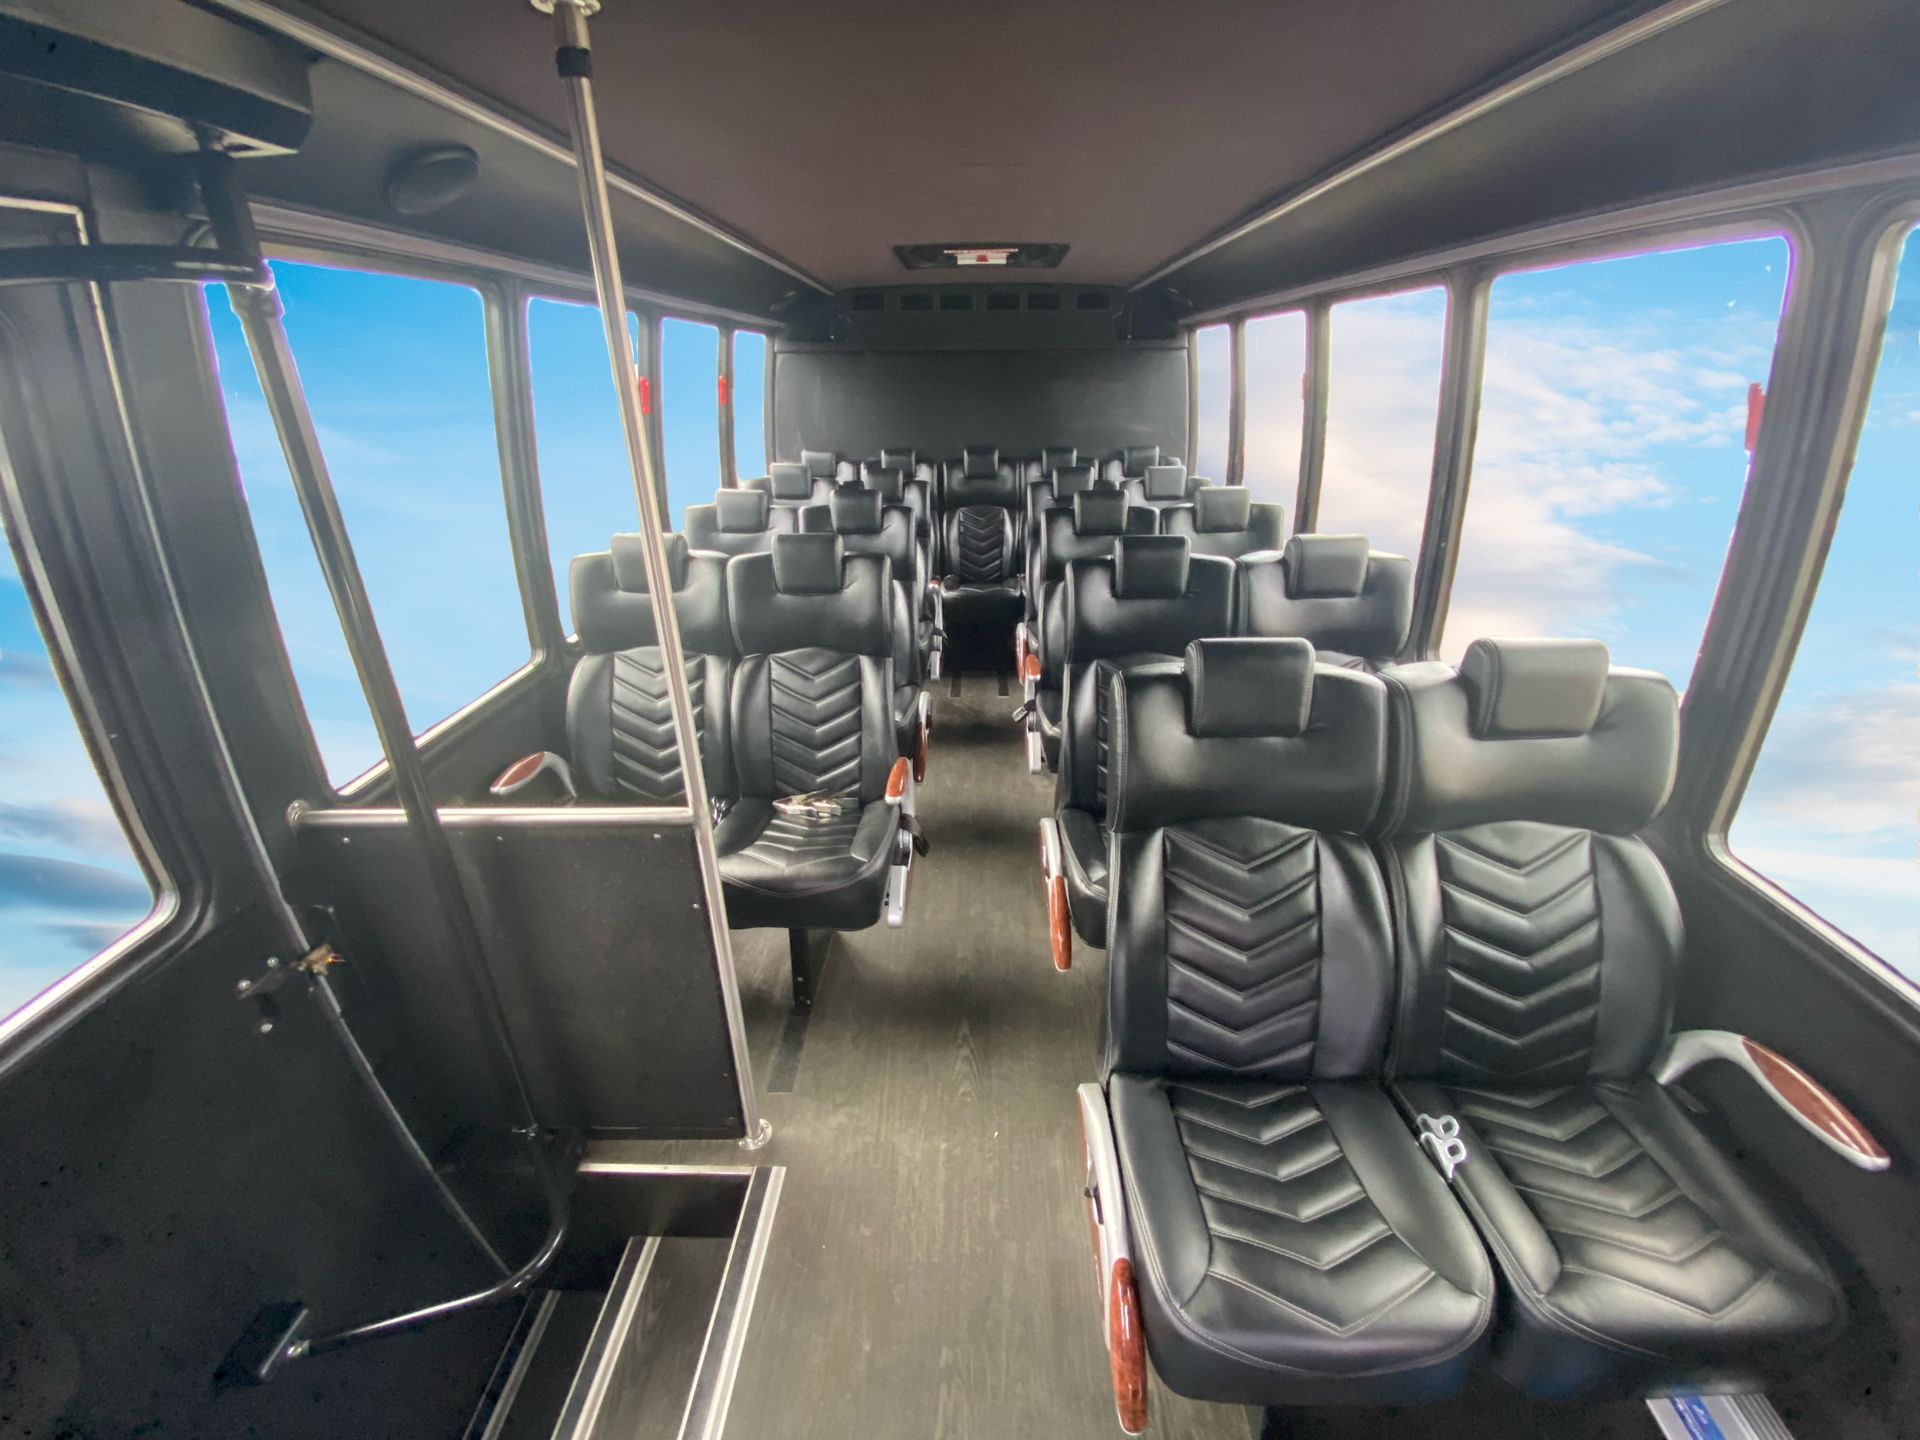 Limo To Go 20 passenger Grech executive shuttle bus interior seating